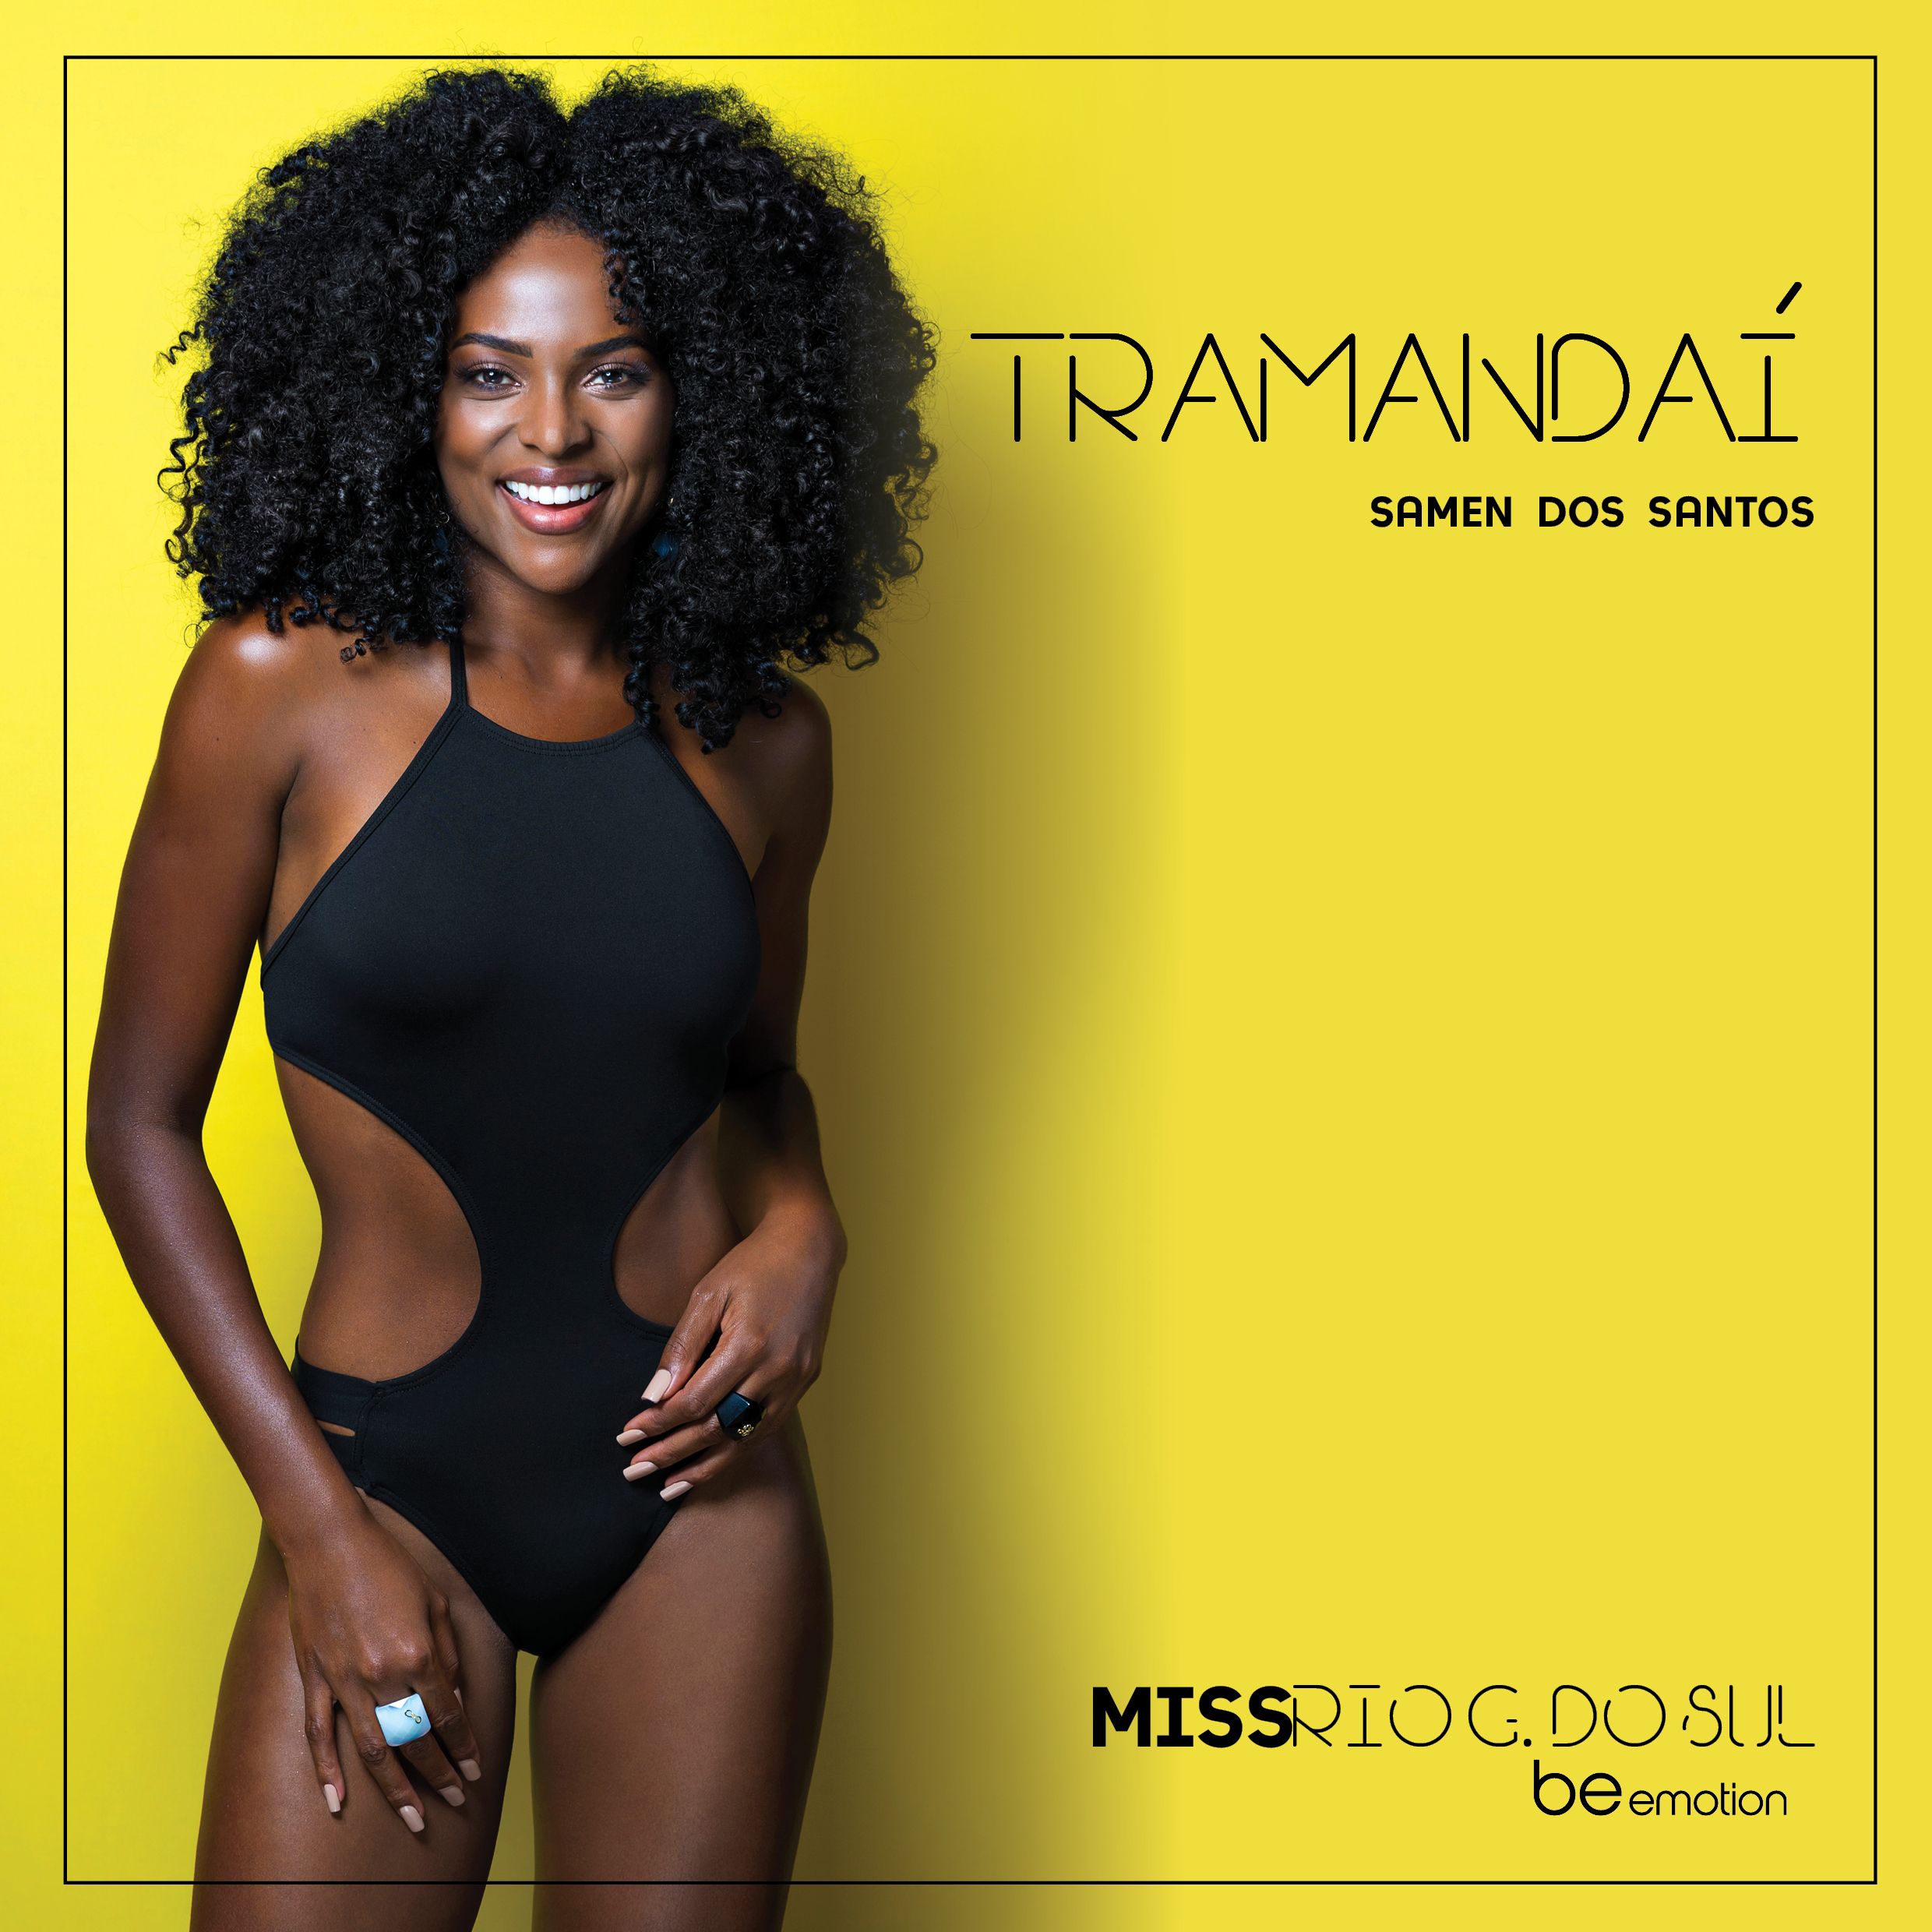 Conheça a Miss Tramandaí 2018, Samen dos Santos